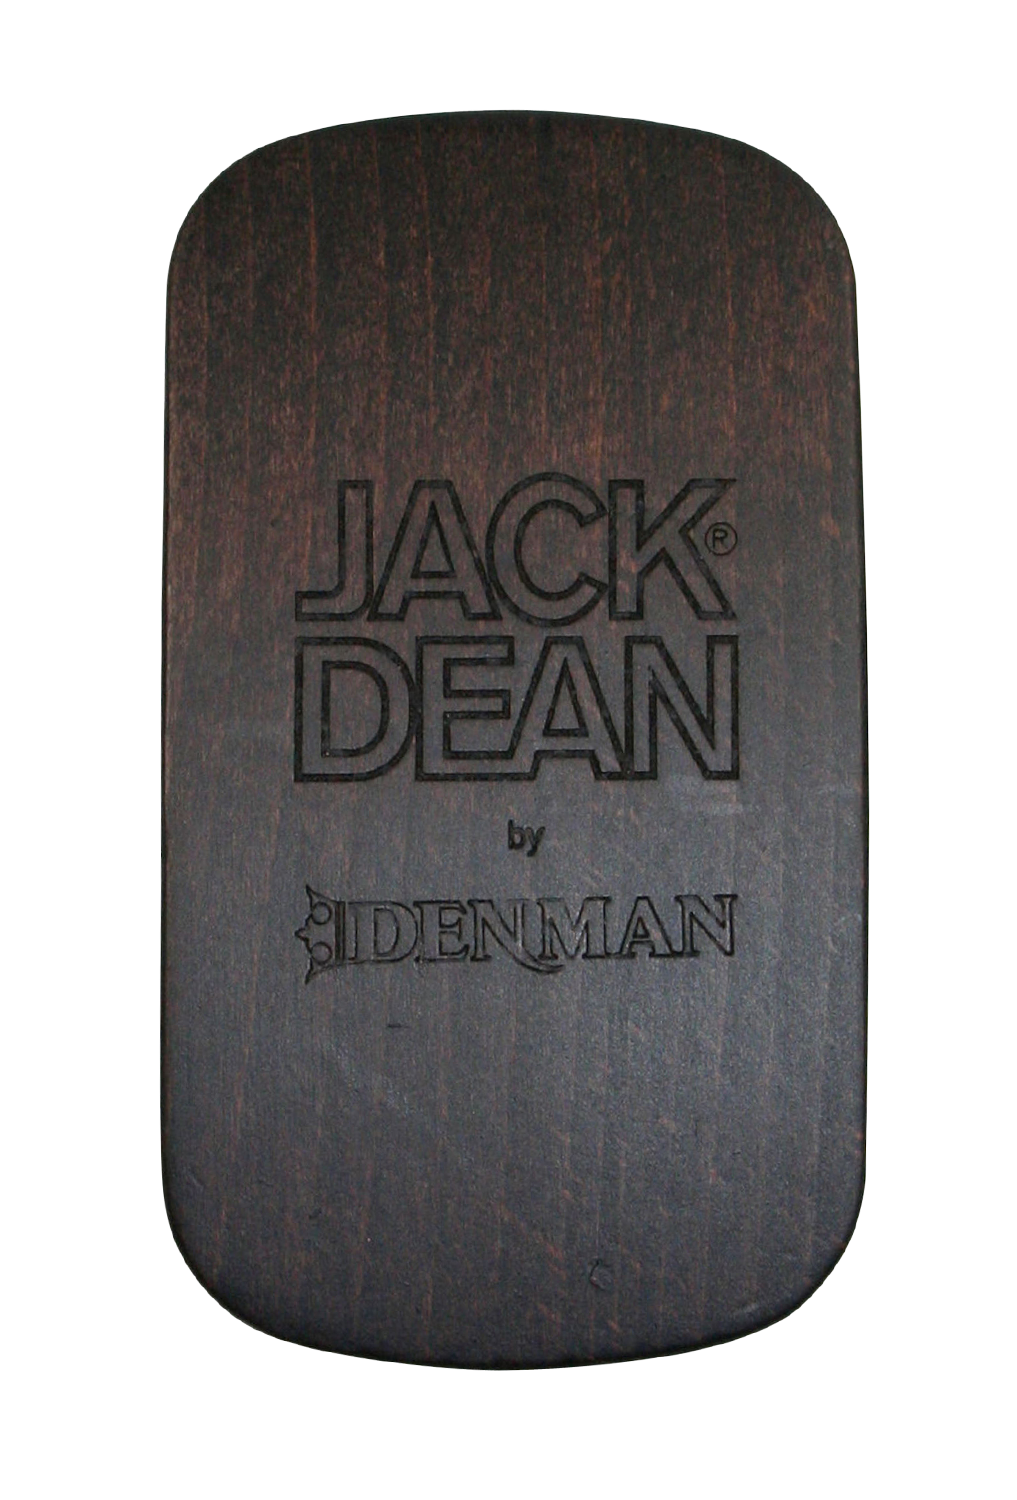 Jack Dean Luxury Beech Wood Military Brush